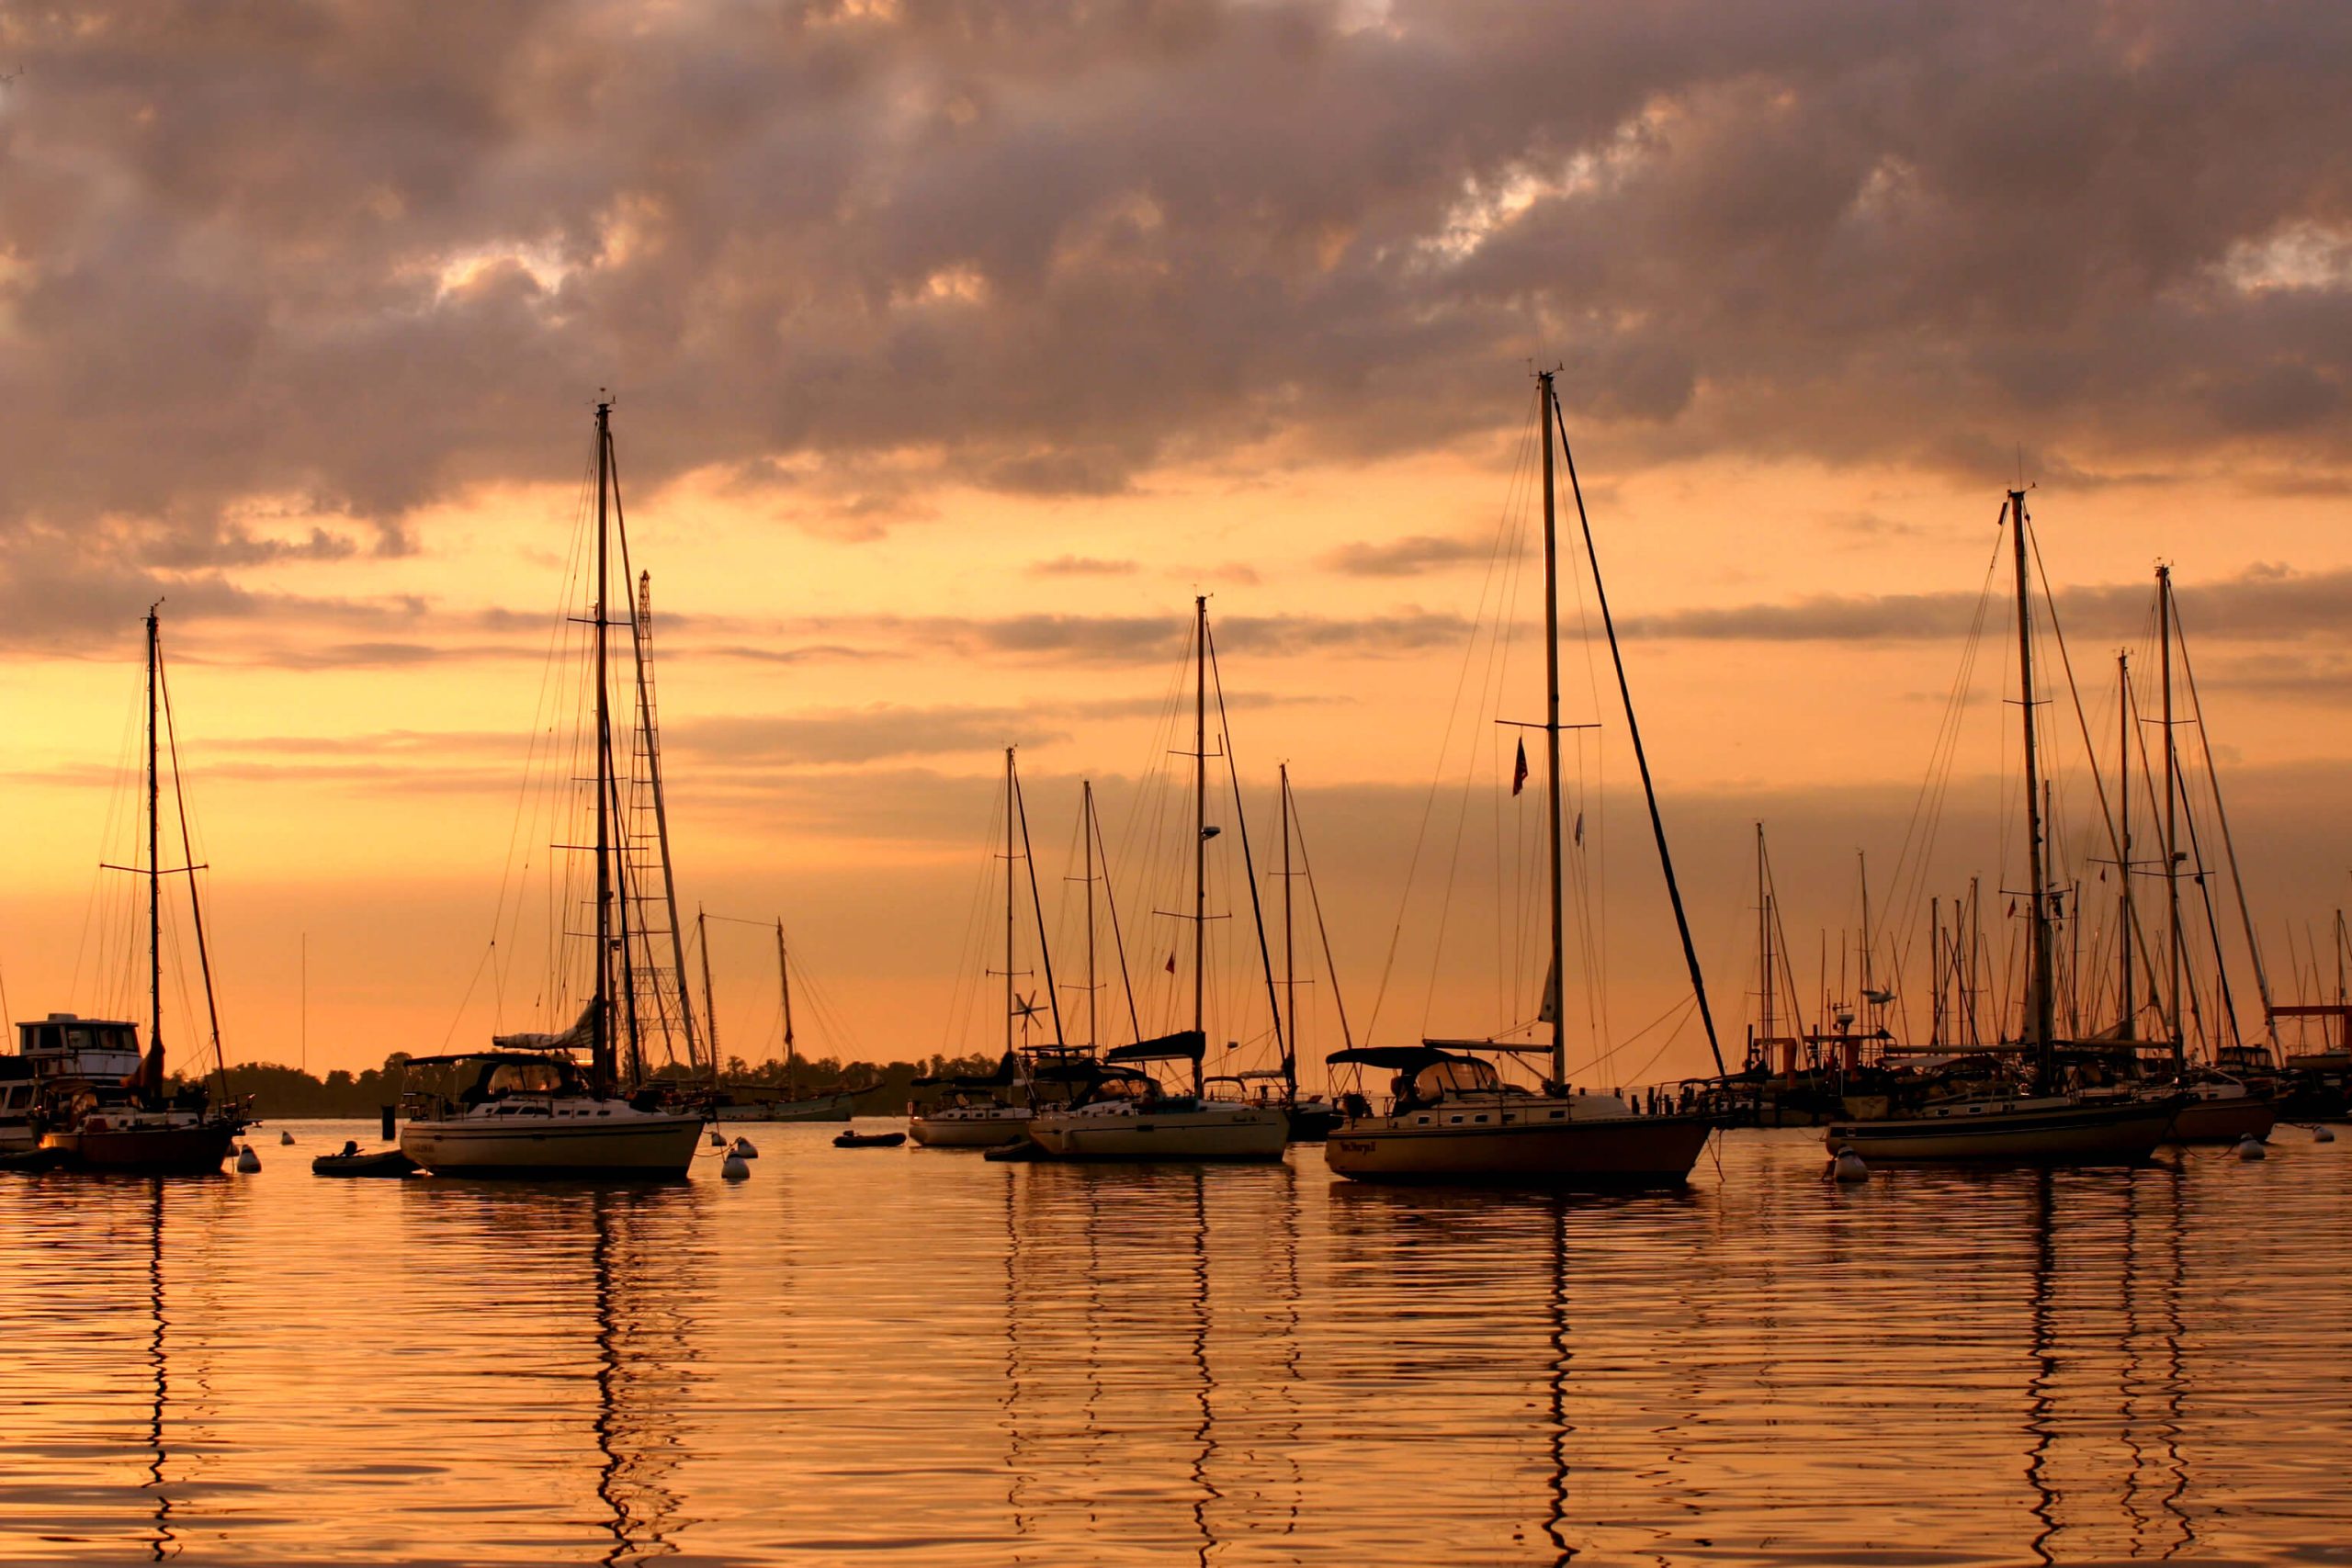 sailboats on the Chesapeake